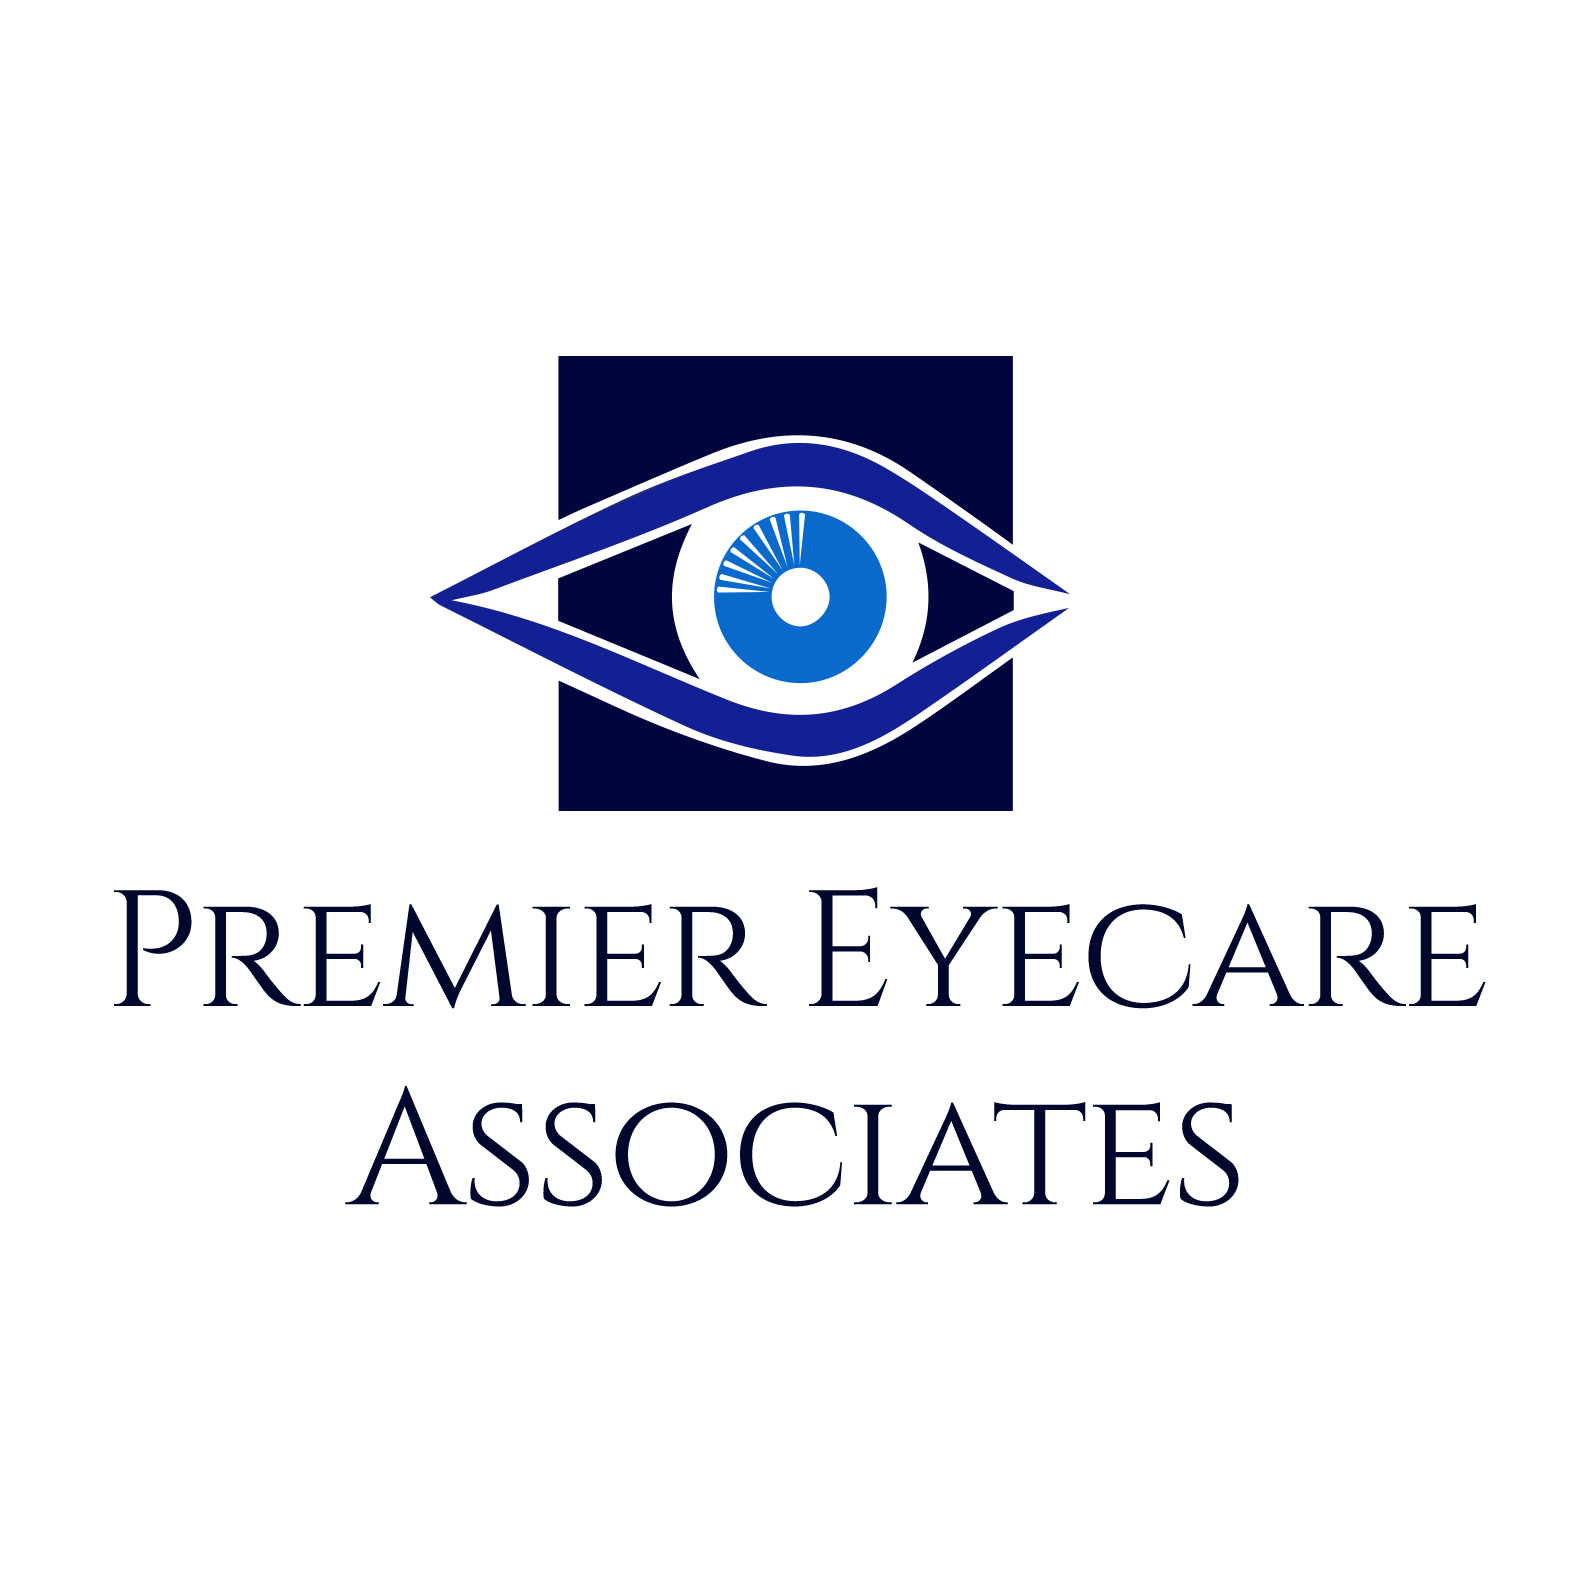 Premier Eyecare Associates - Chillicothe 1115 Washington St, Chillicothe Missouri 64601